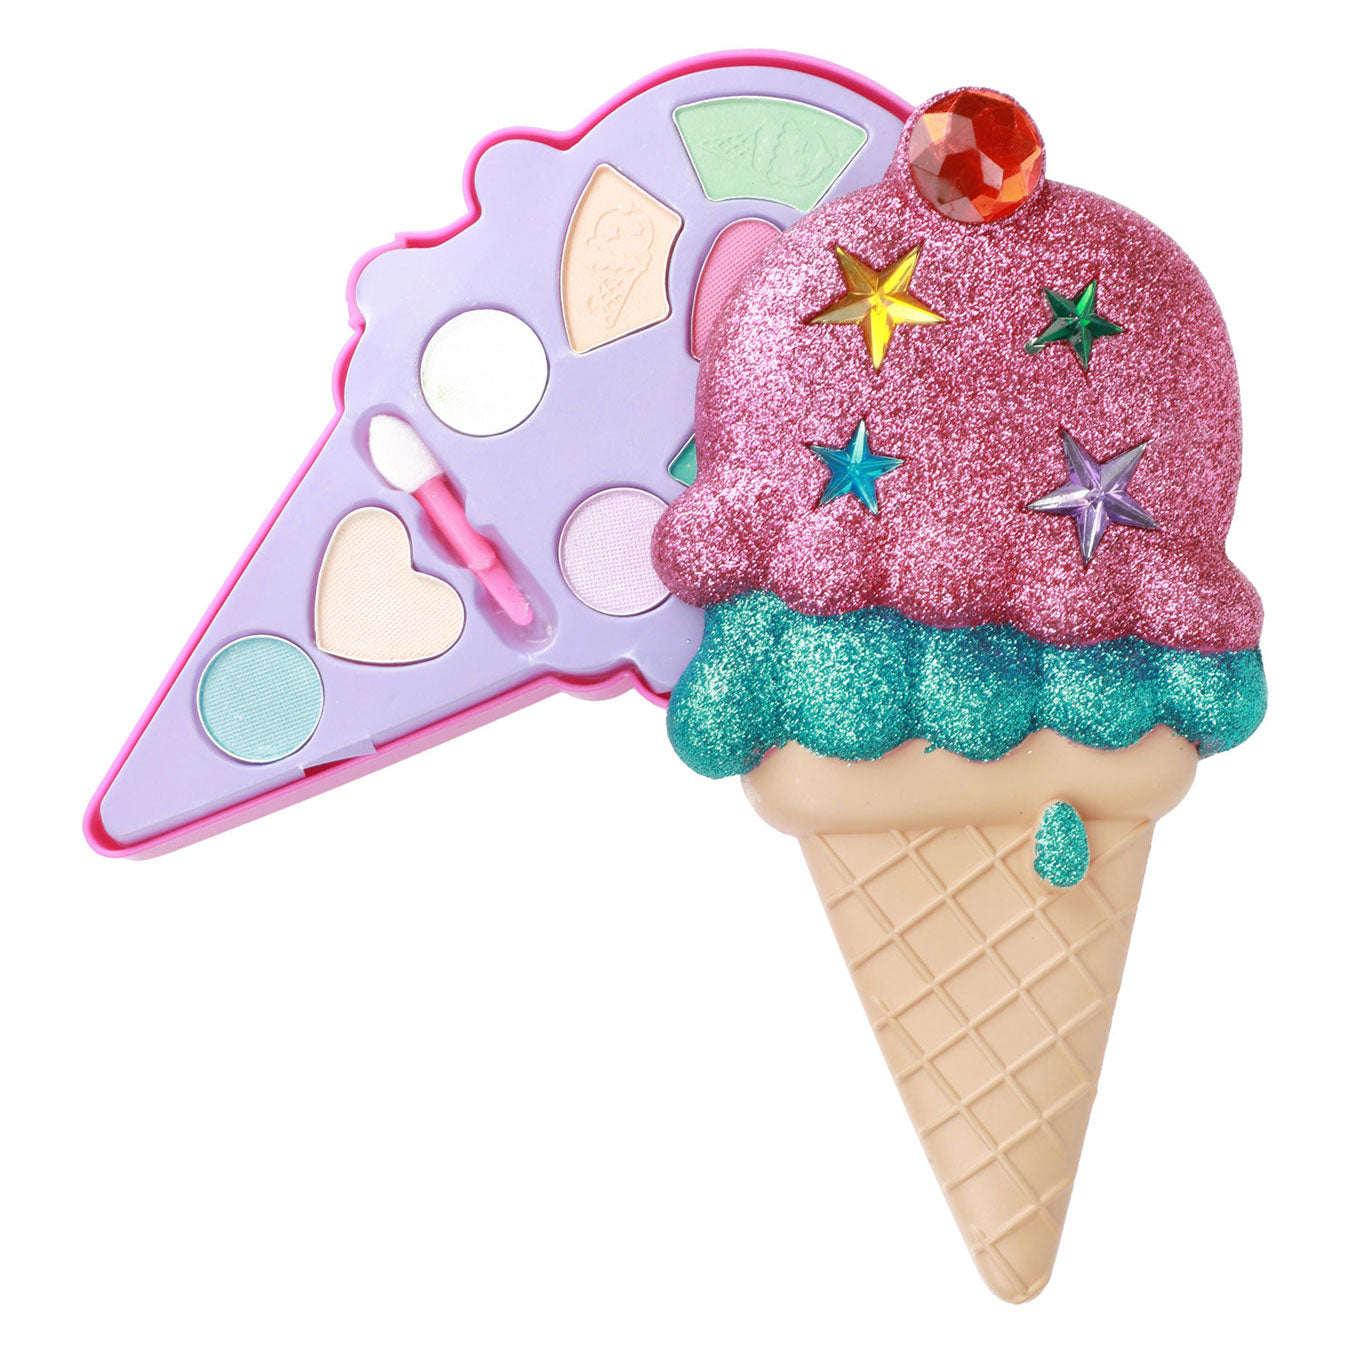 Toi-Toys Glamor Shine Makeup Glitter Ice Cream Cone Set